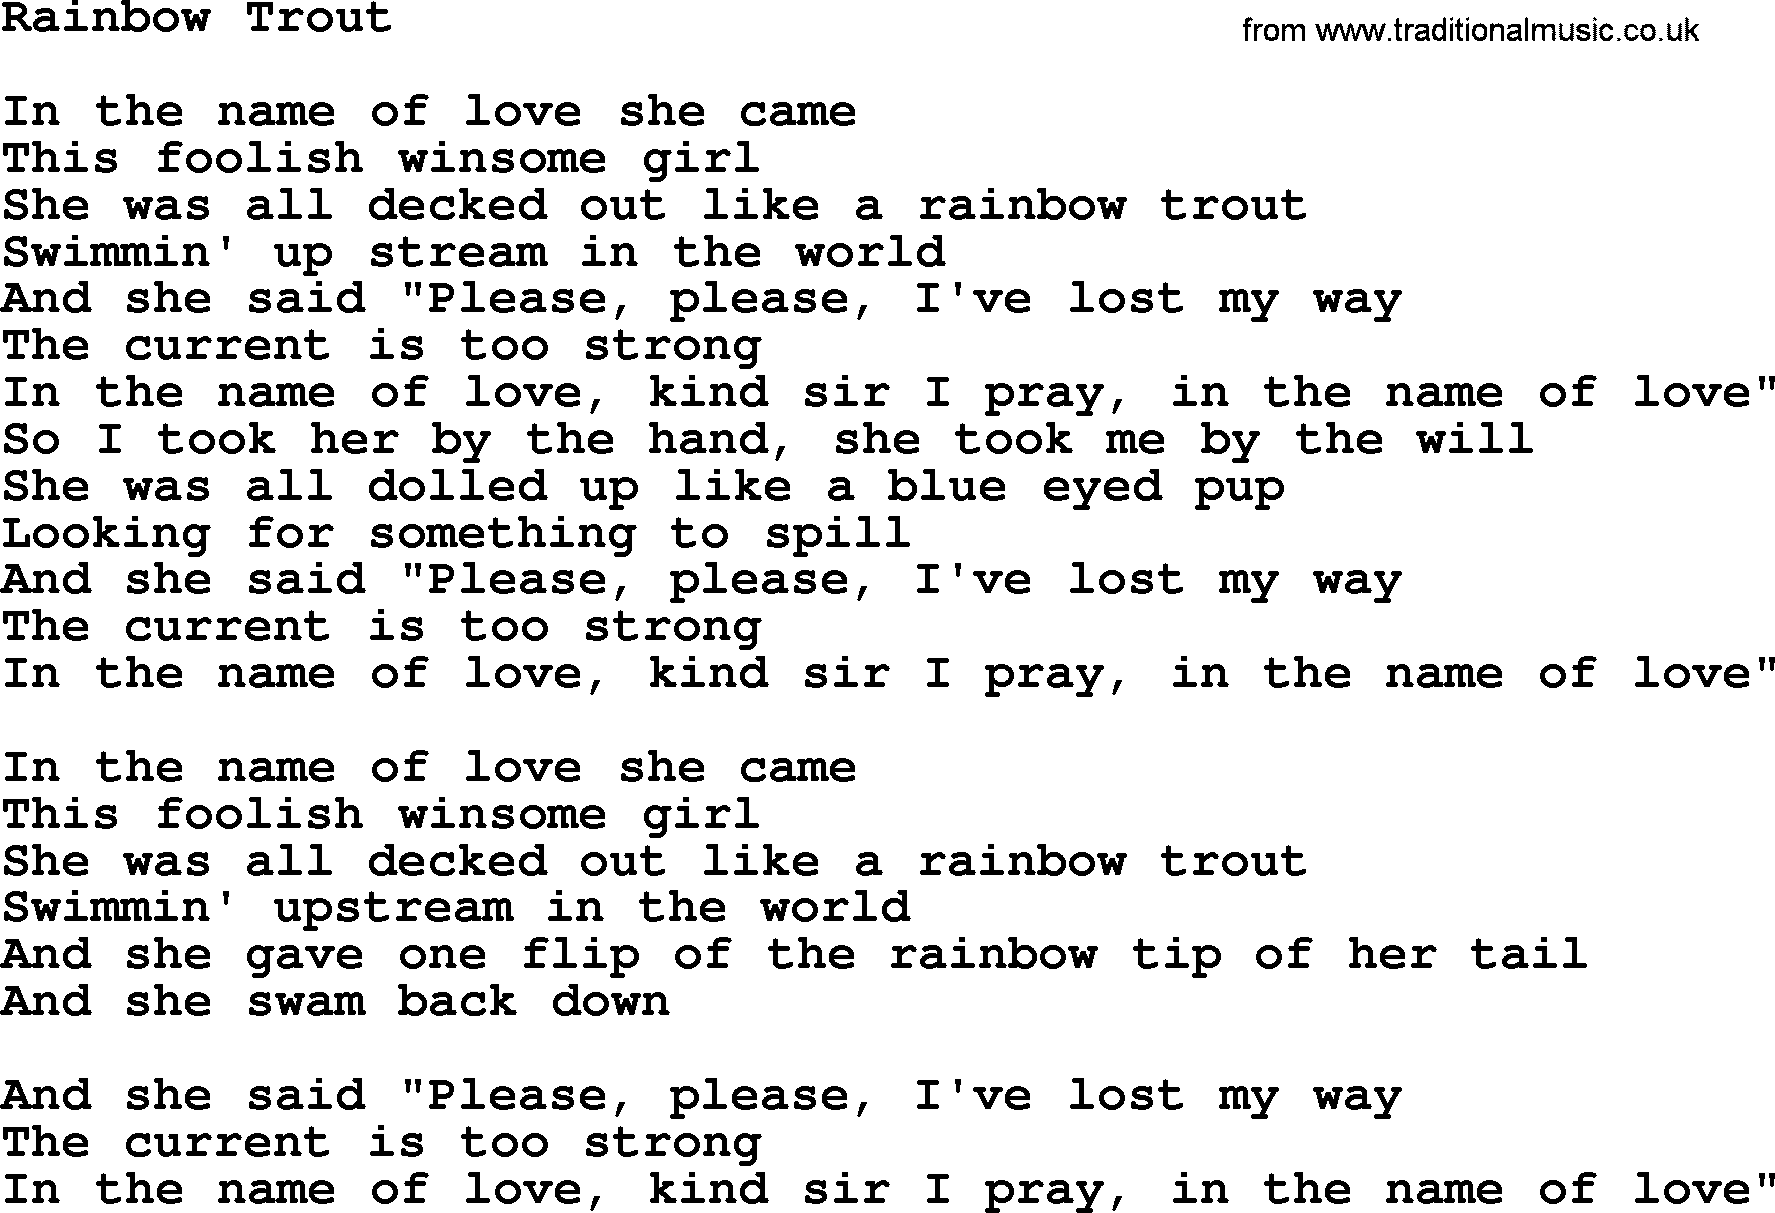 Gordon Lightfoot song Rainbow Trout, lyrics